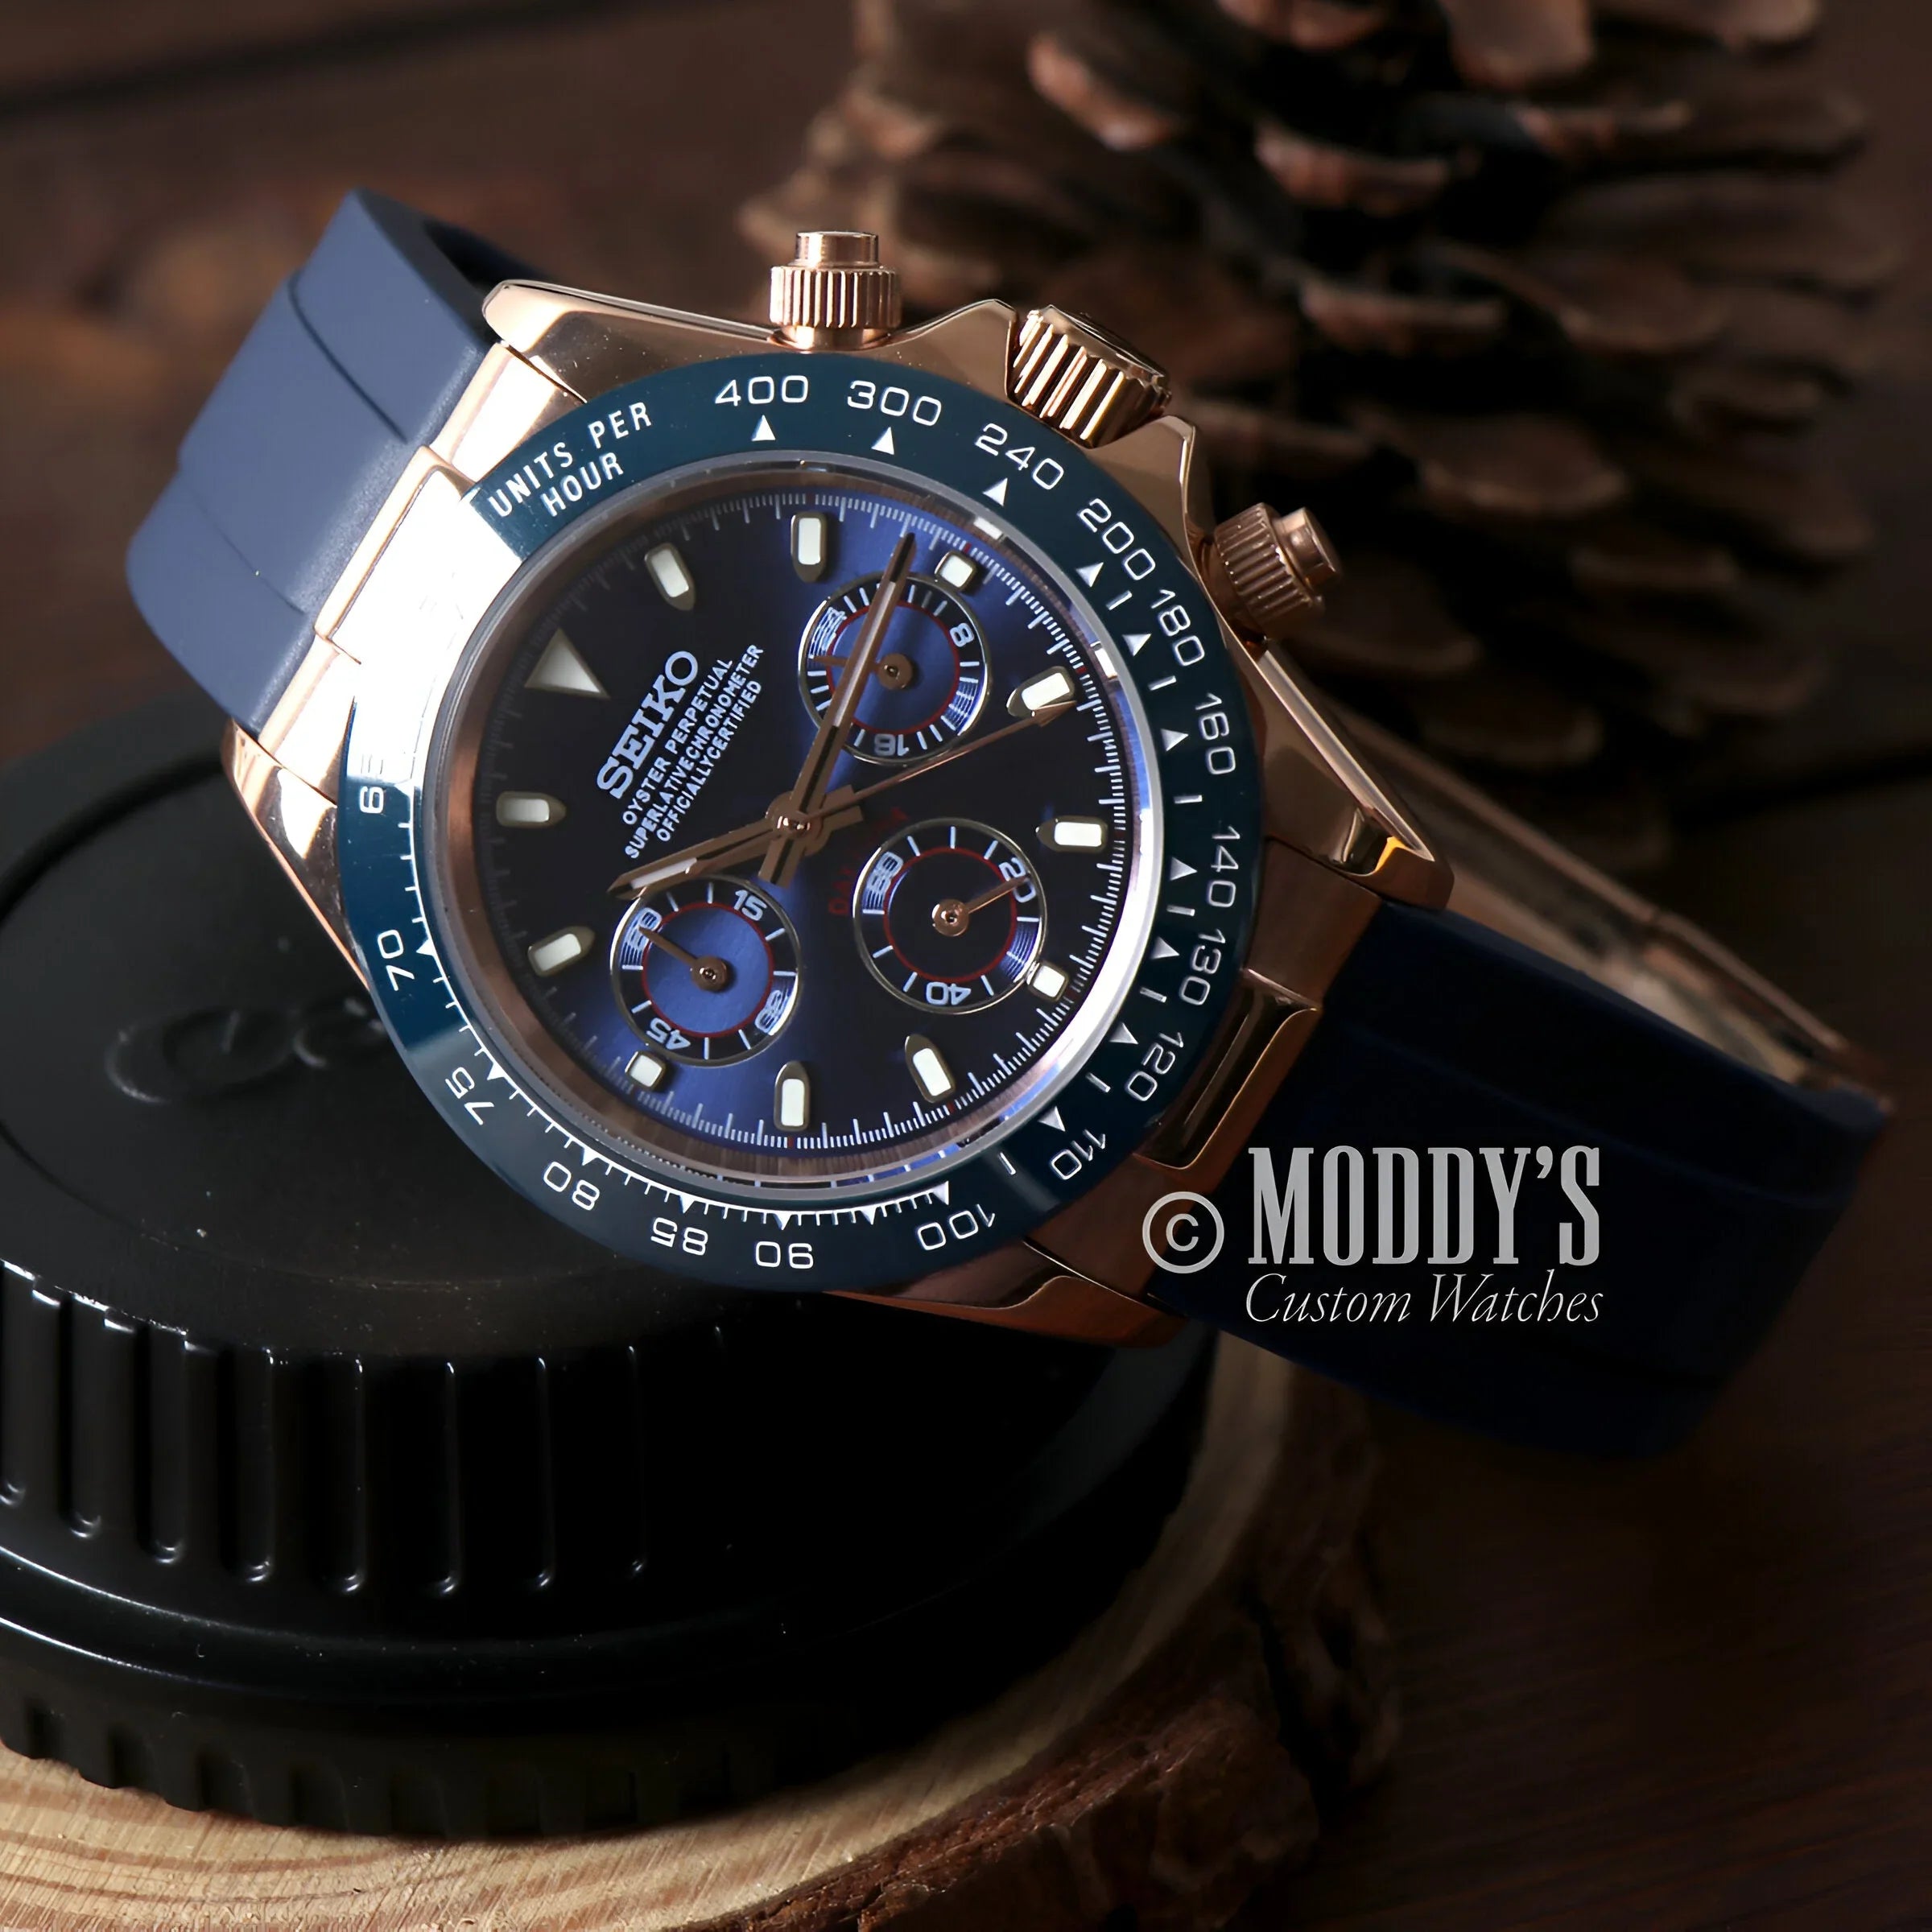 Seitona Royal Blue Watch Featuring Stunning Blue Dial - Seiko Mod Daytona Exclusive Design